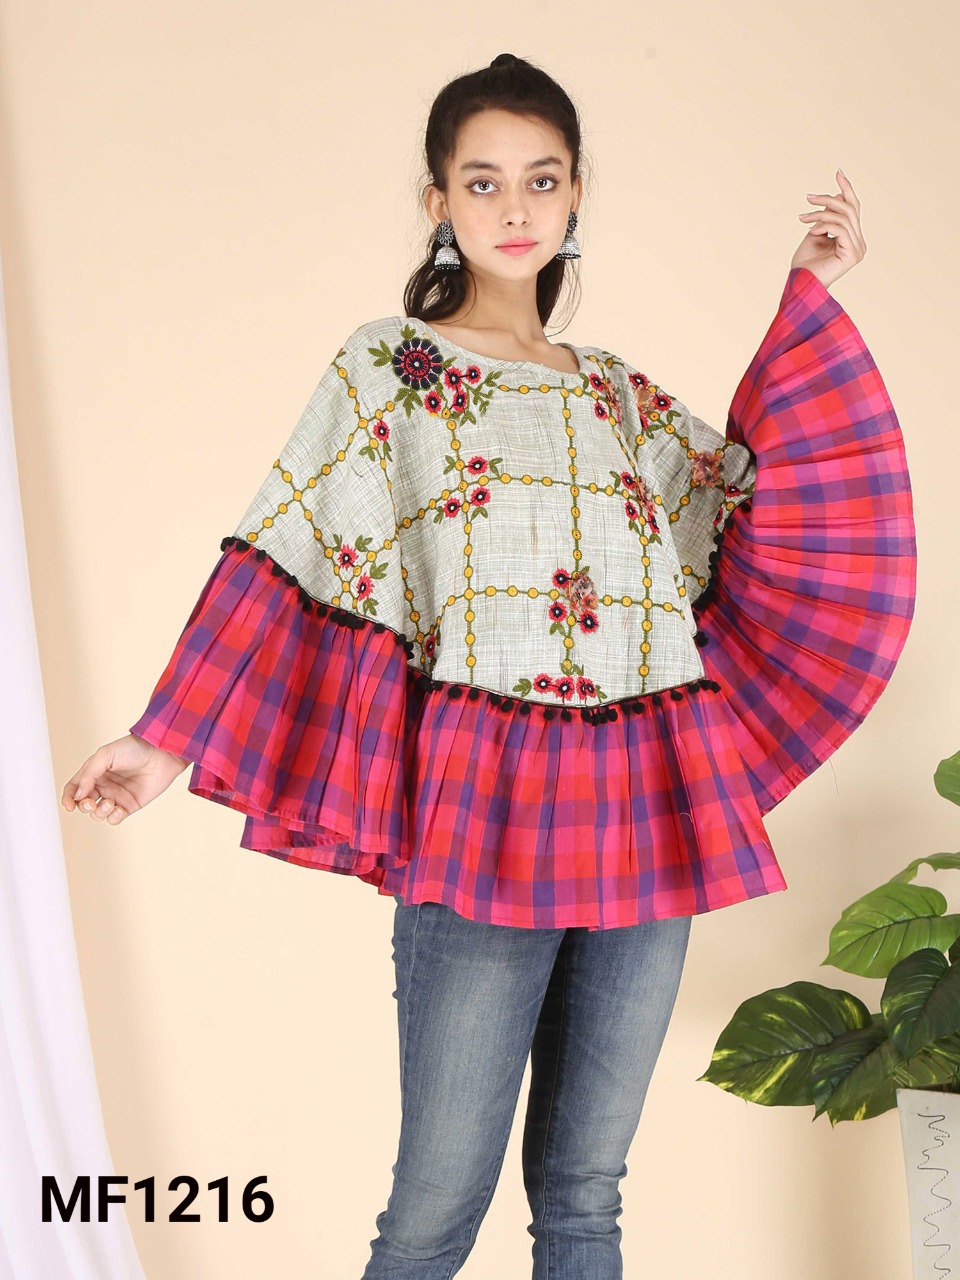 Mesmora fashion rangeela re kahdi new and modern style poncho catalog